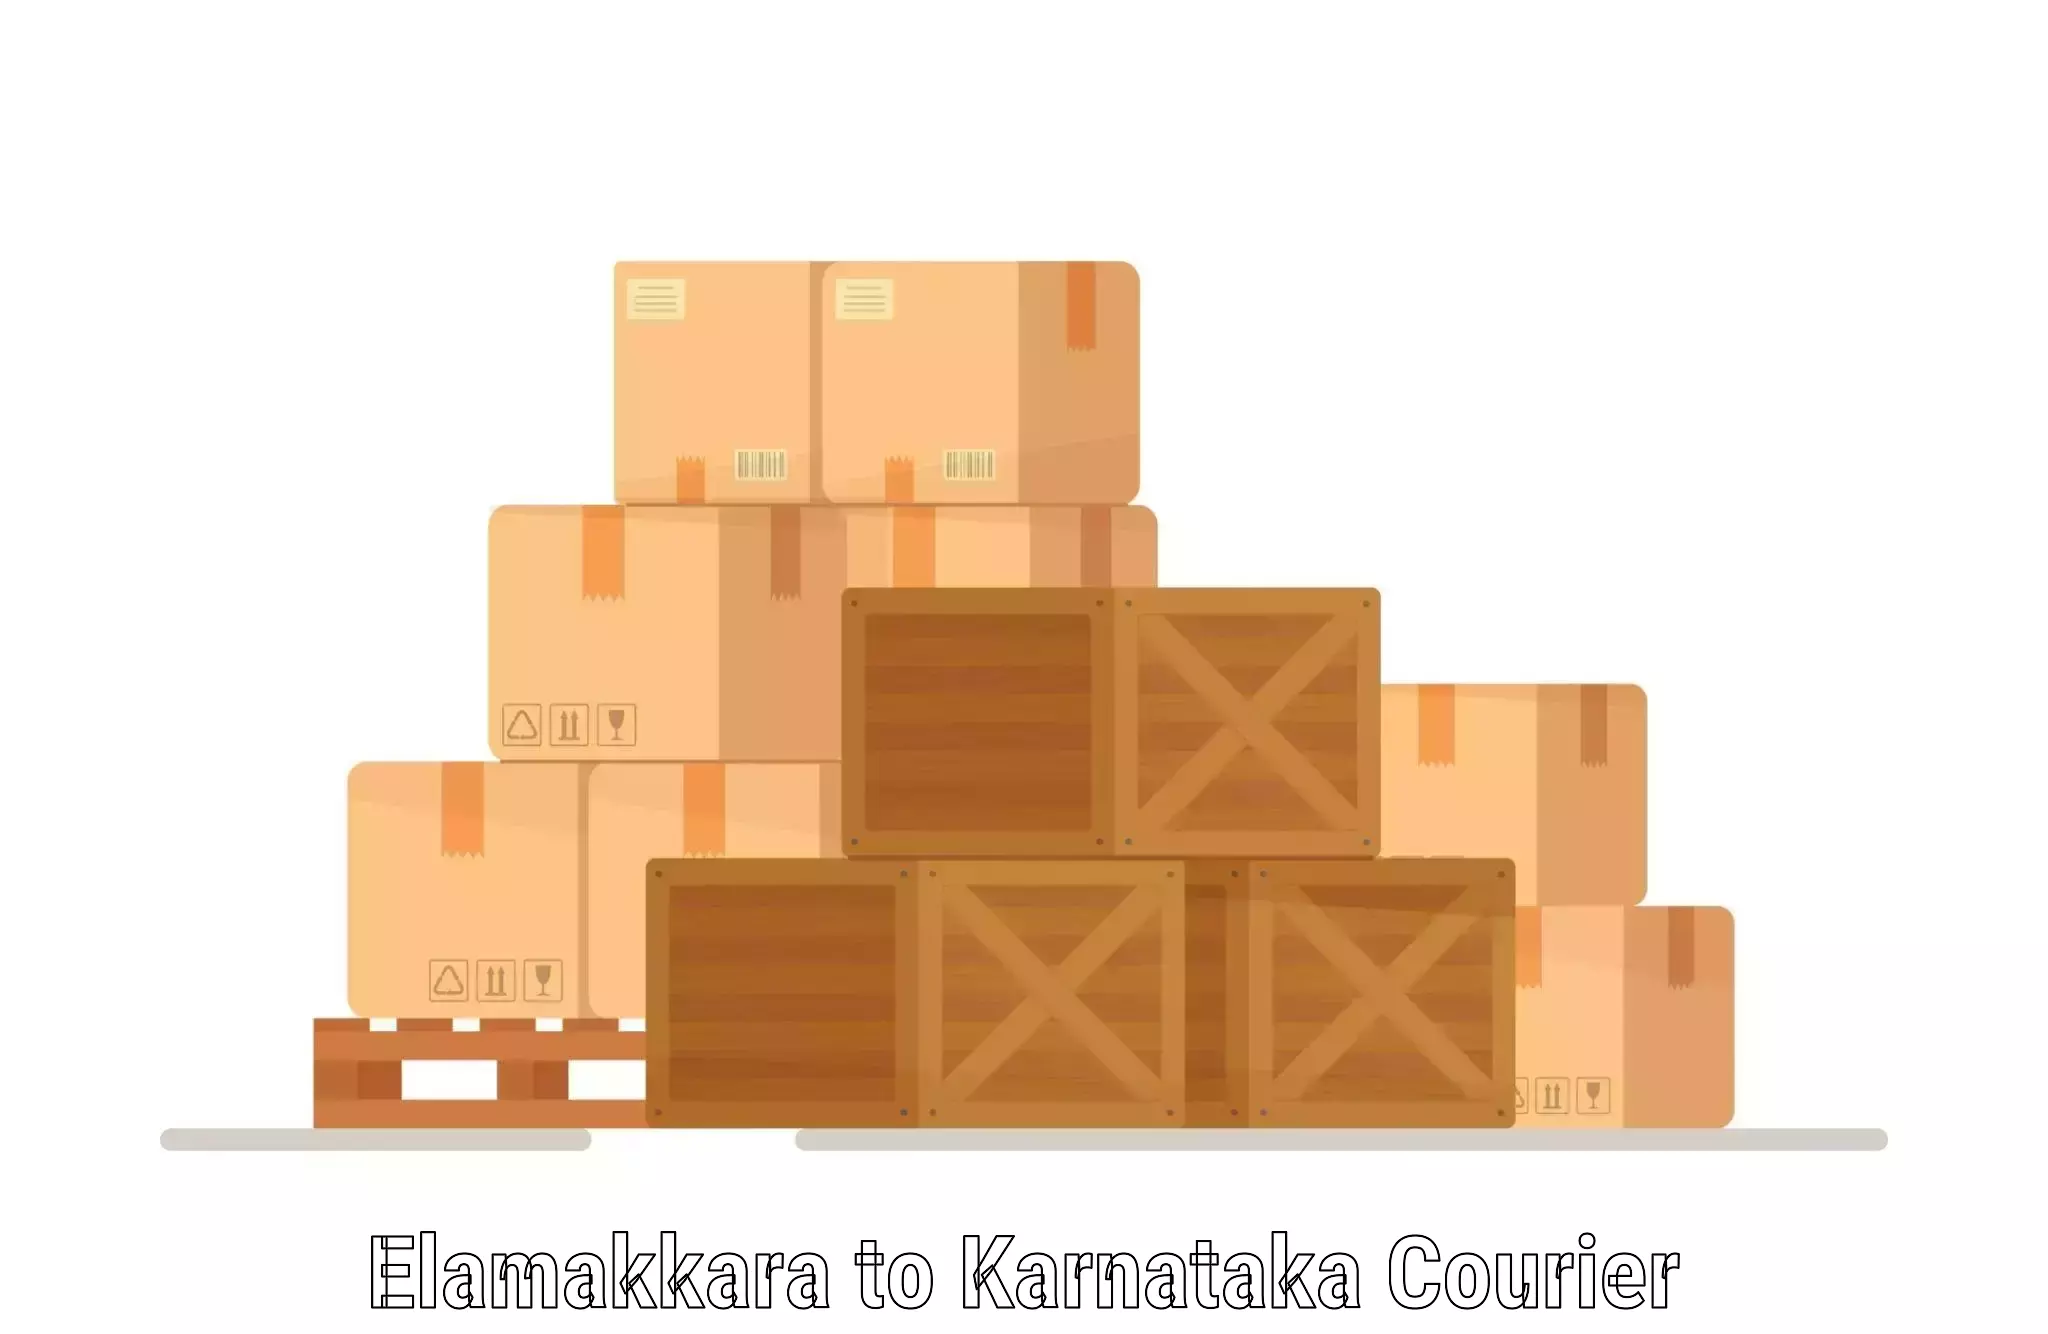 Package delivery network Elamakkara to Rattihalli